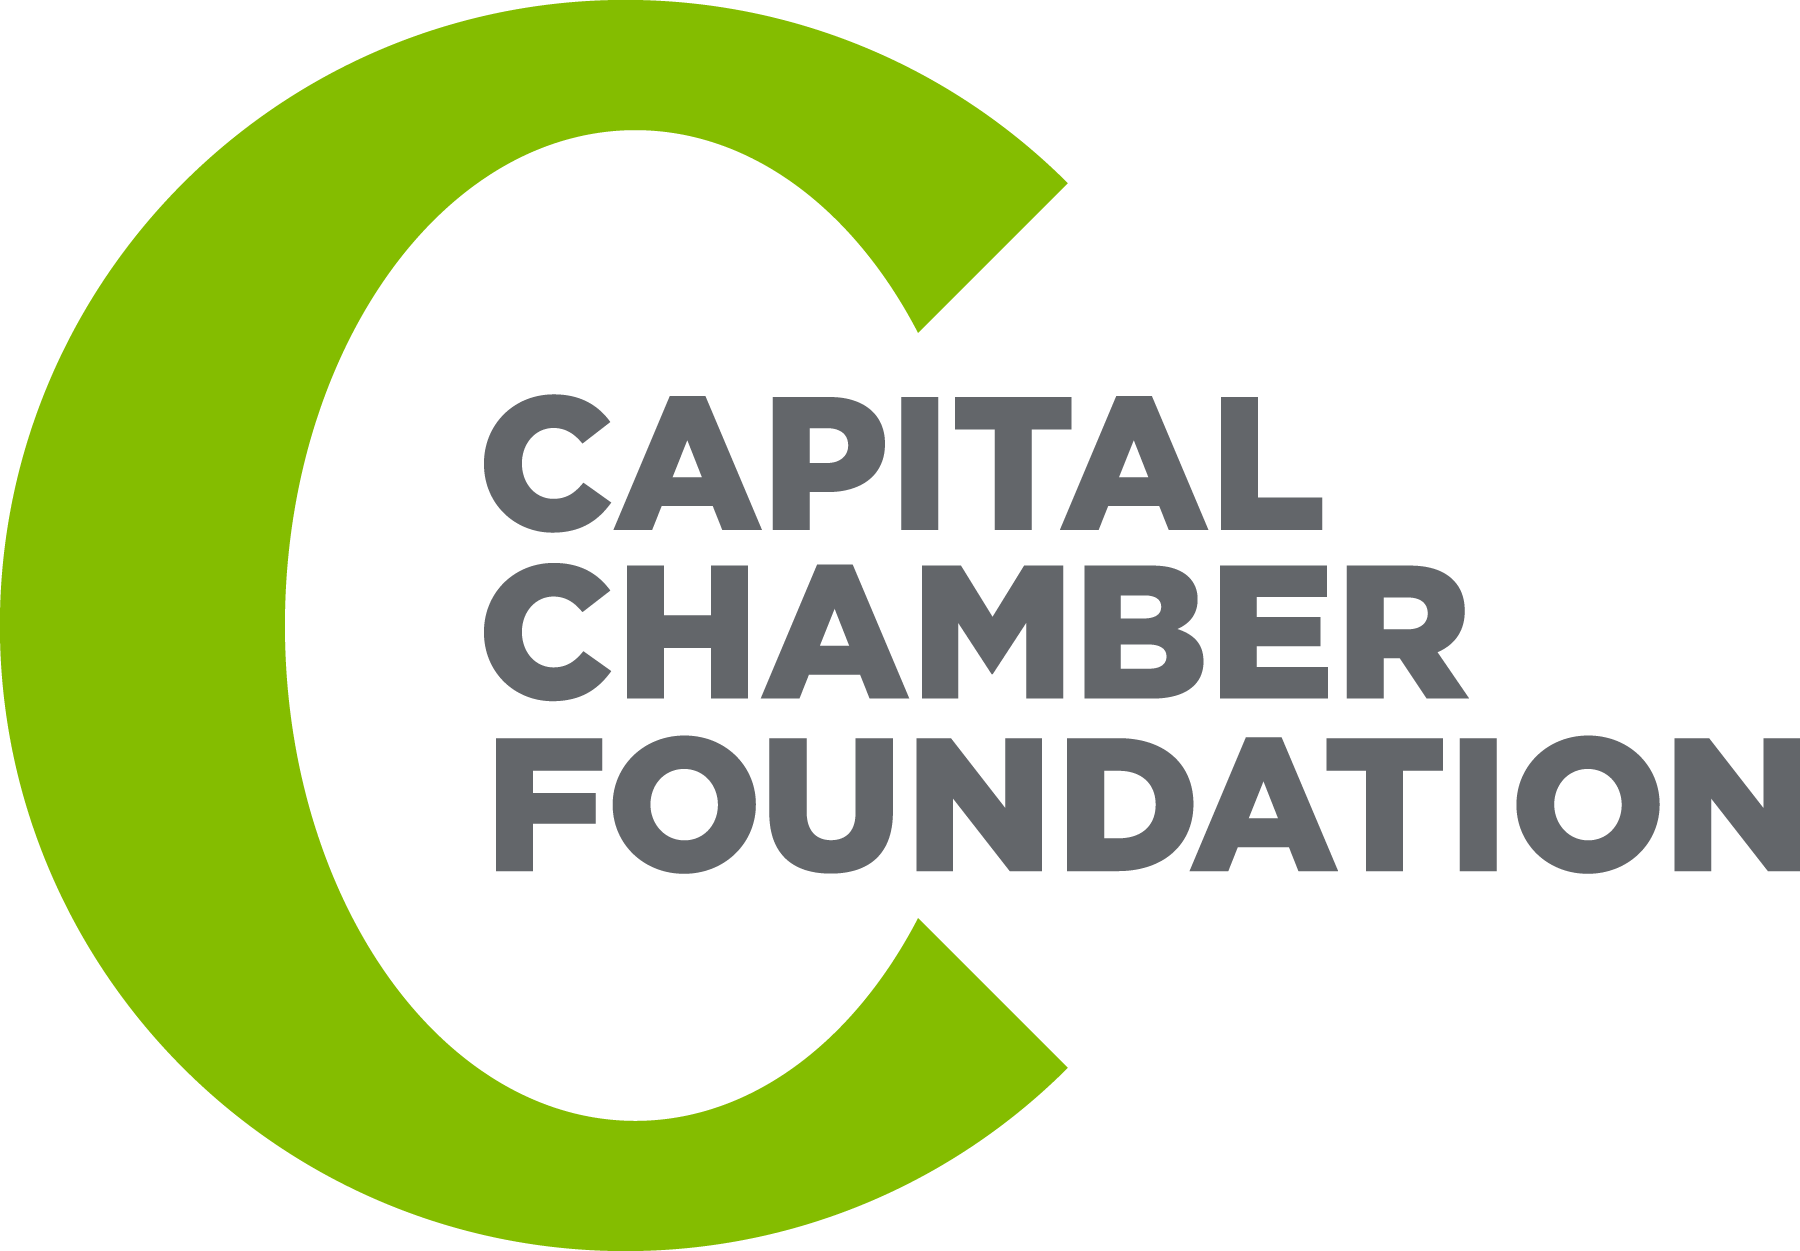 Capital Region Logo